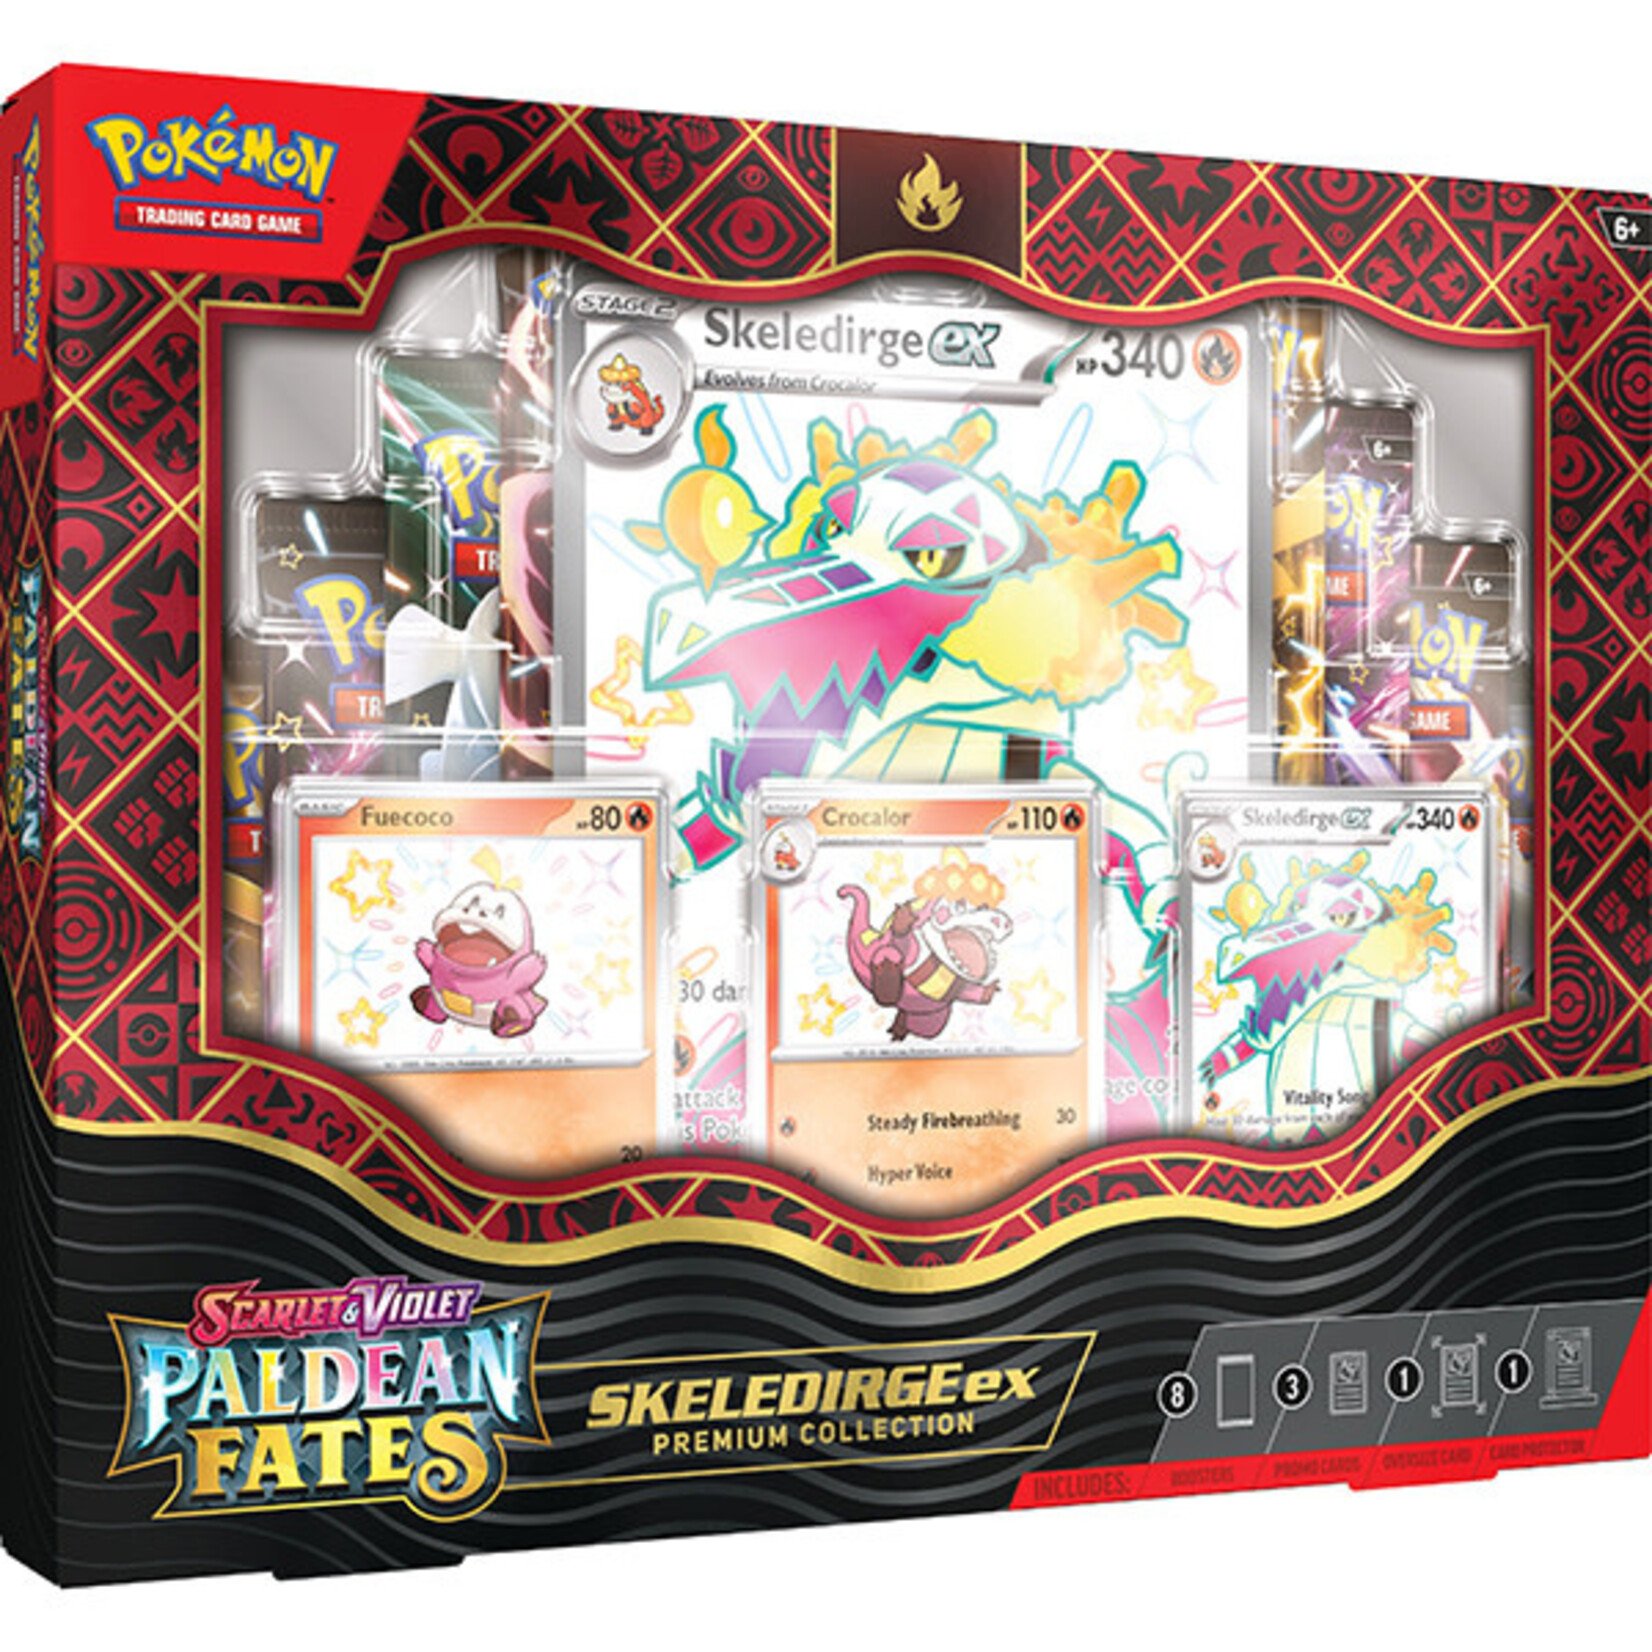 Pokémon Pokémon Trading Card Game: Paldean Fates ex Premium Collection Box (Skeledirge)